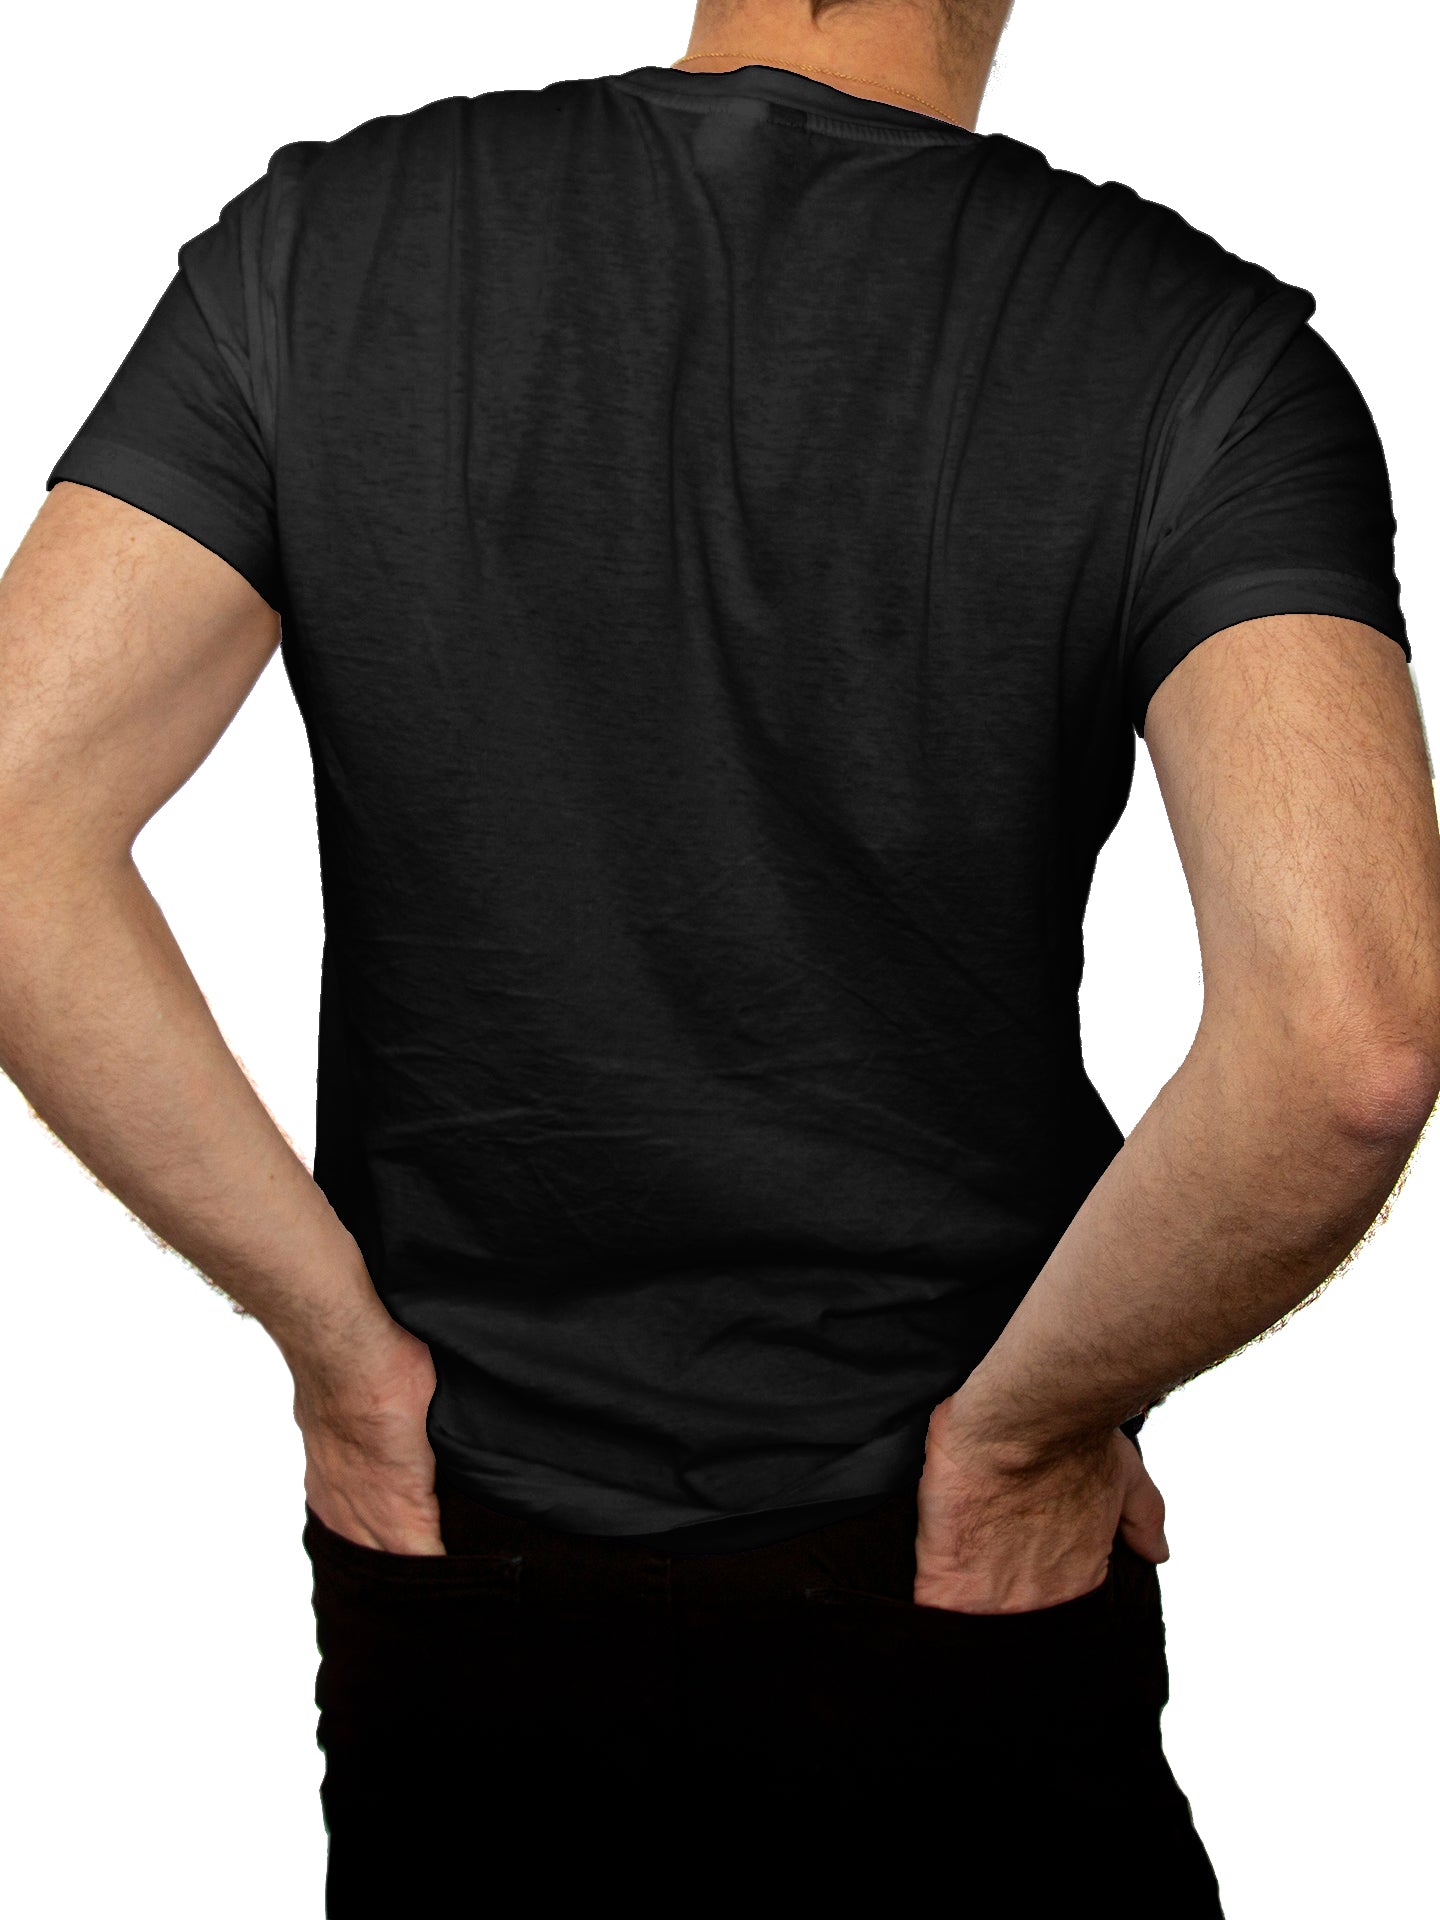 KHS T-Shirt eagle logo black